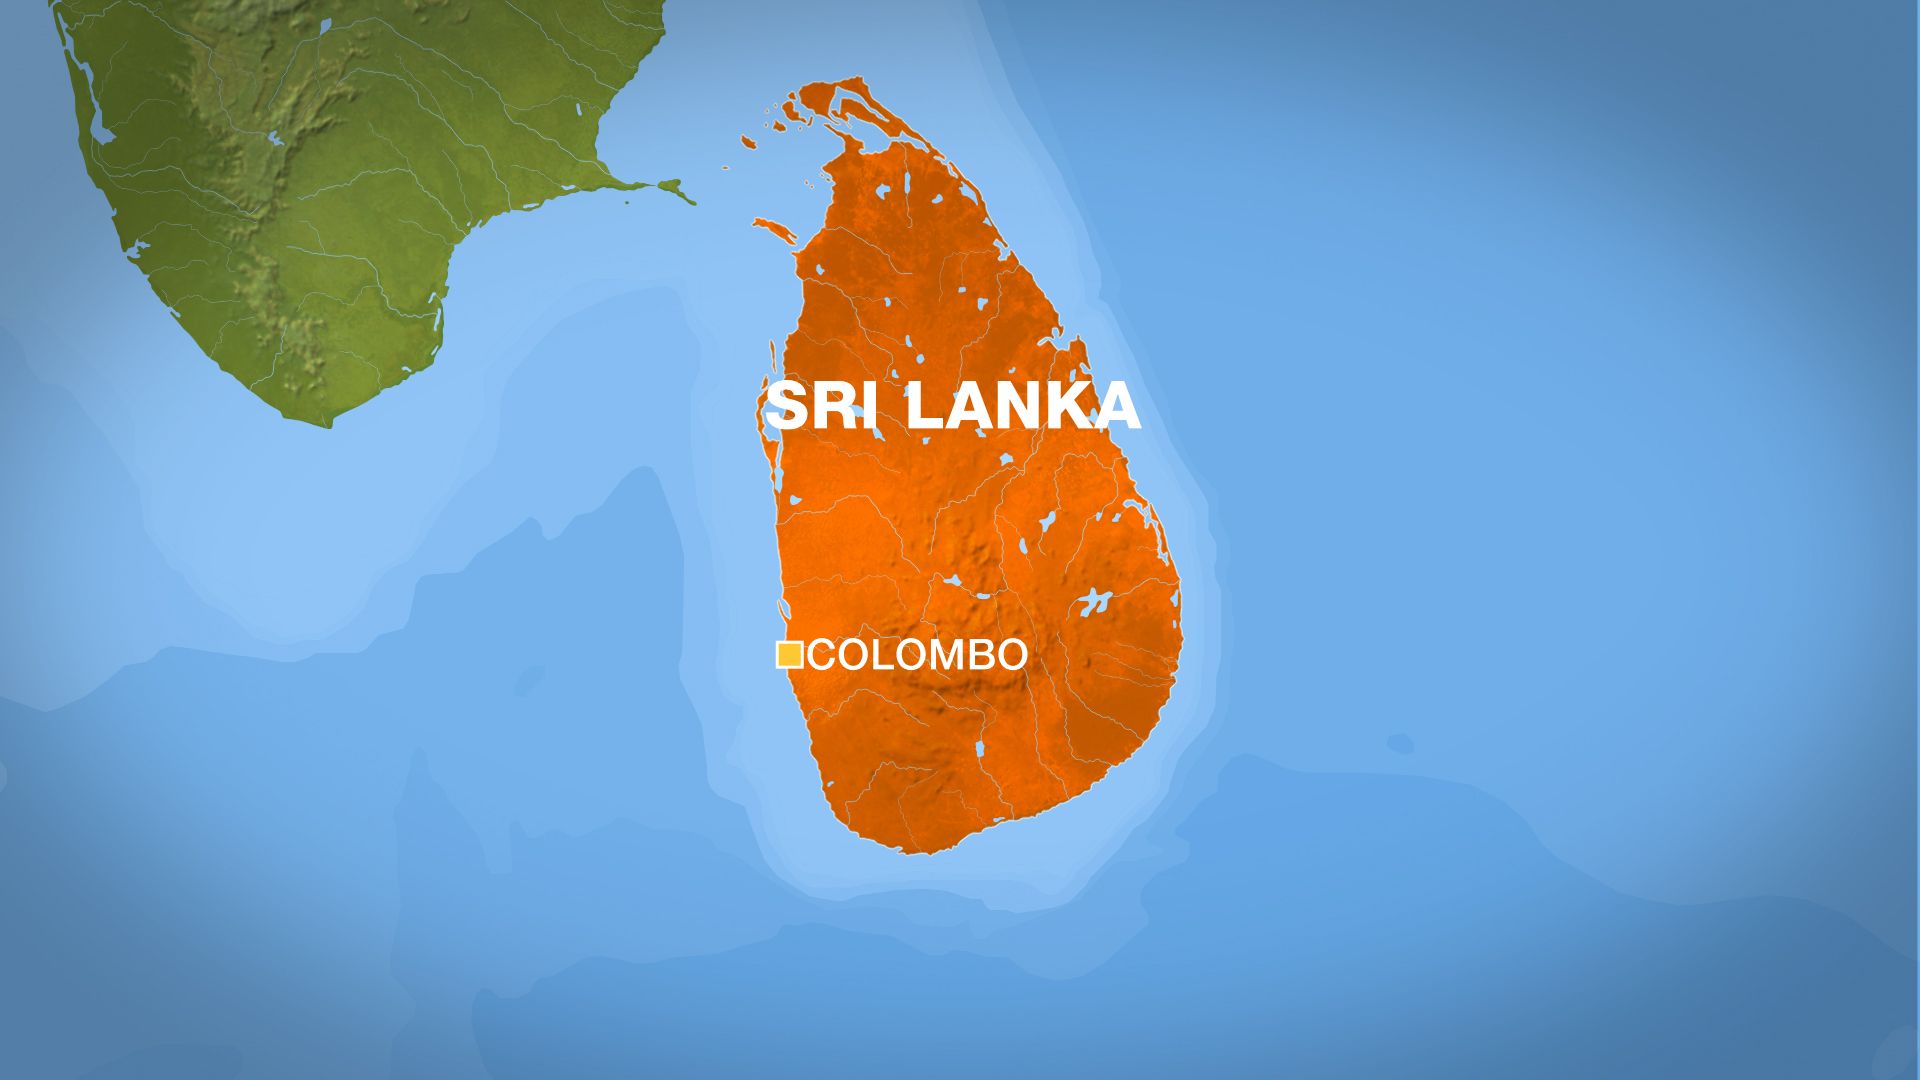 india extends help srilanka heavy rain landslide